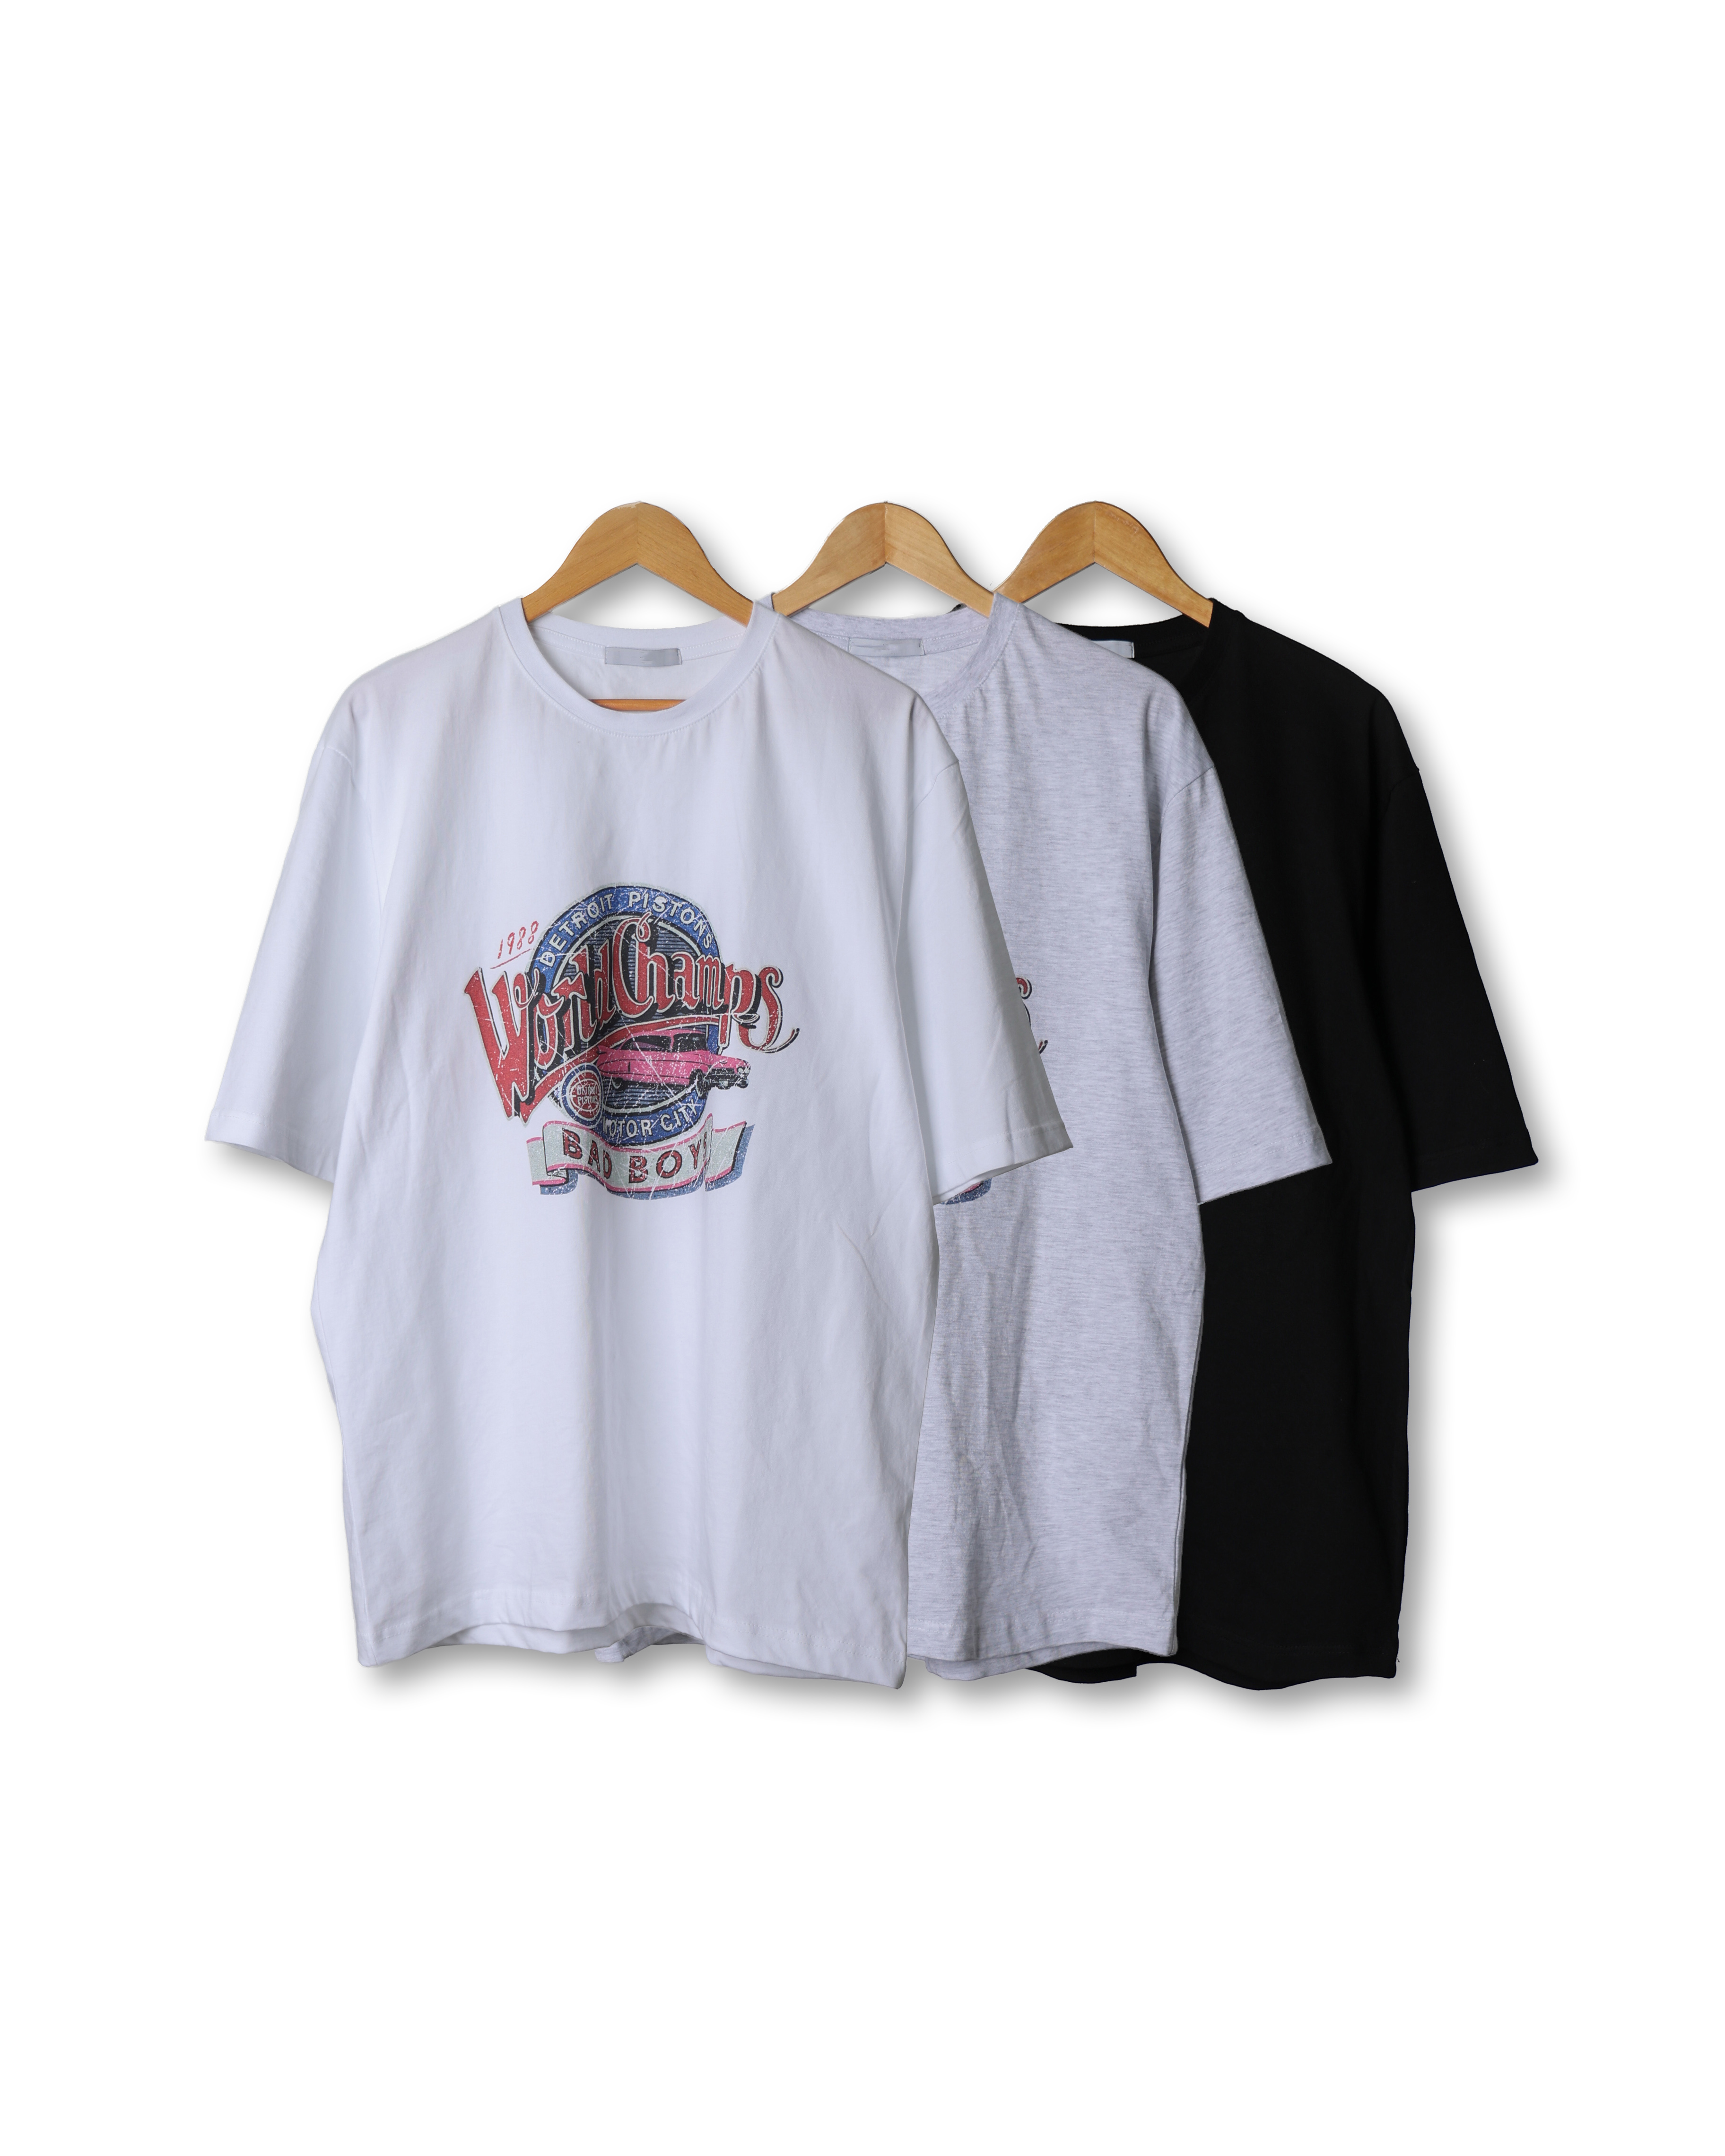 BOLLW WORLD CHAMPS Vintage T Shirts (Black/Light Gray/White)